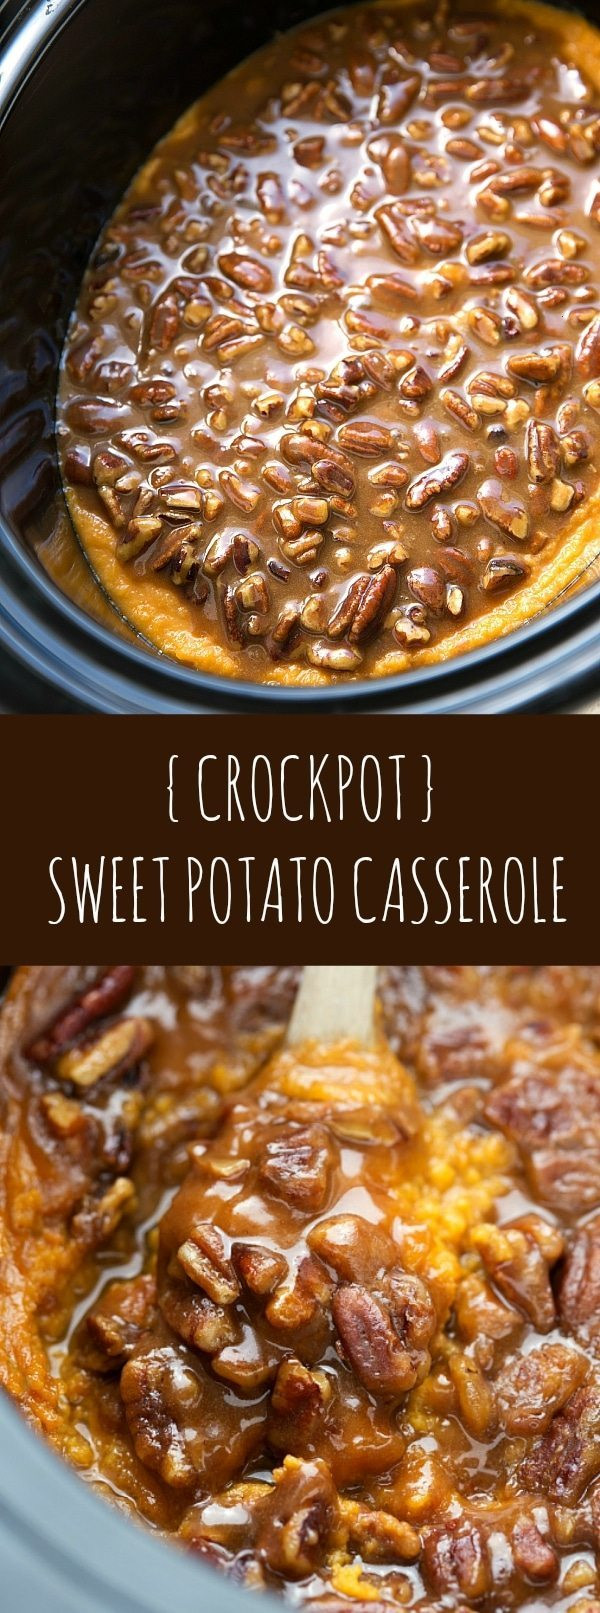 Sweet Potato Casserole Allrecipes
 slow cooker sweet potato casserole allrecipes